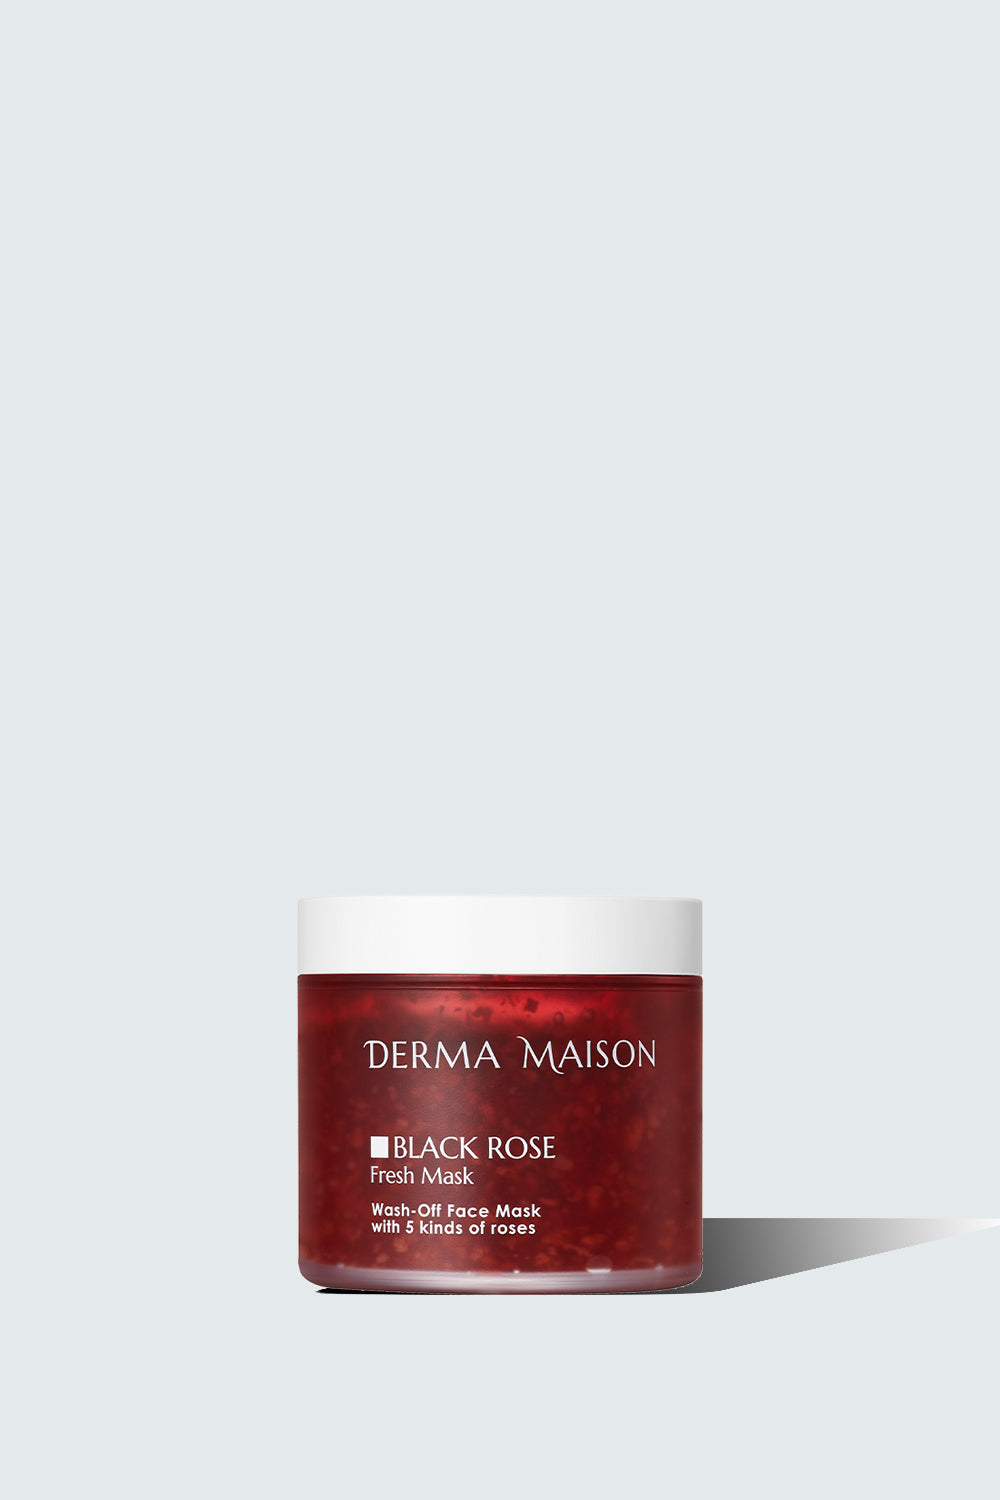 Black Rose Fresh Mask - 230g DERMA MAISON